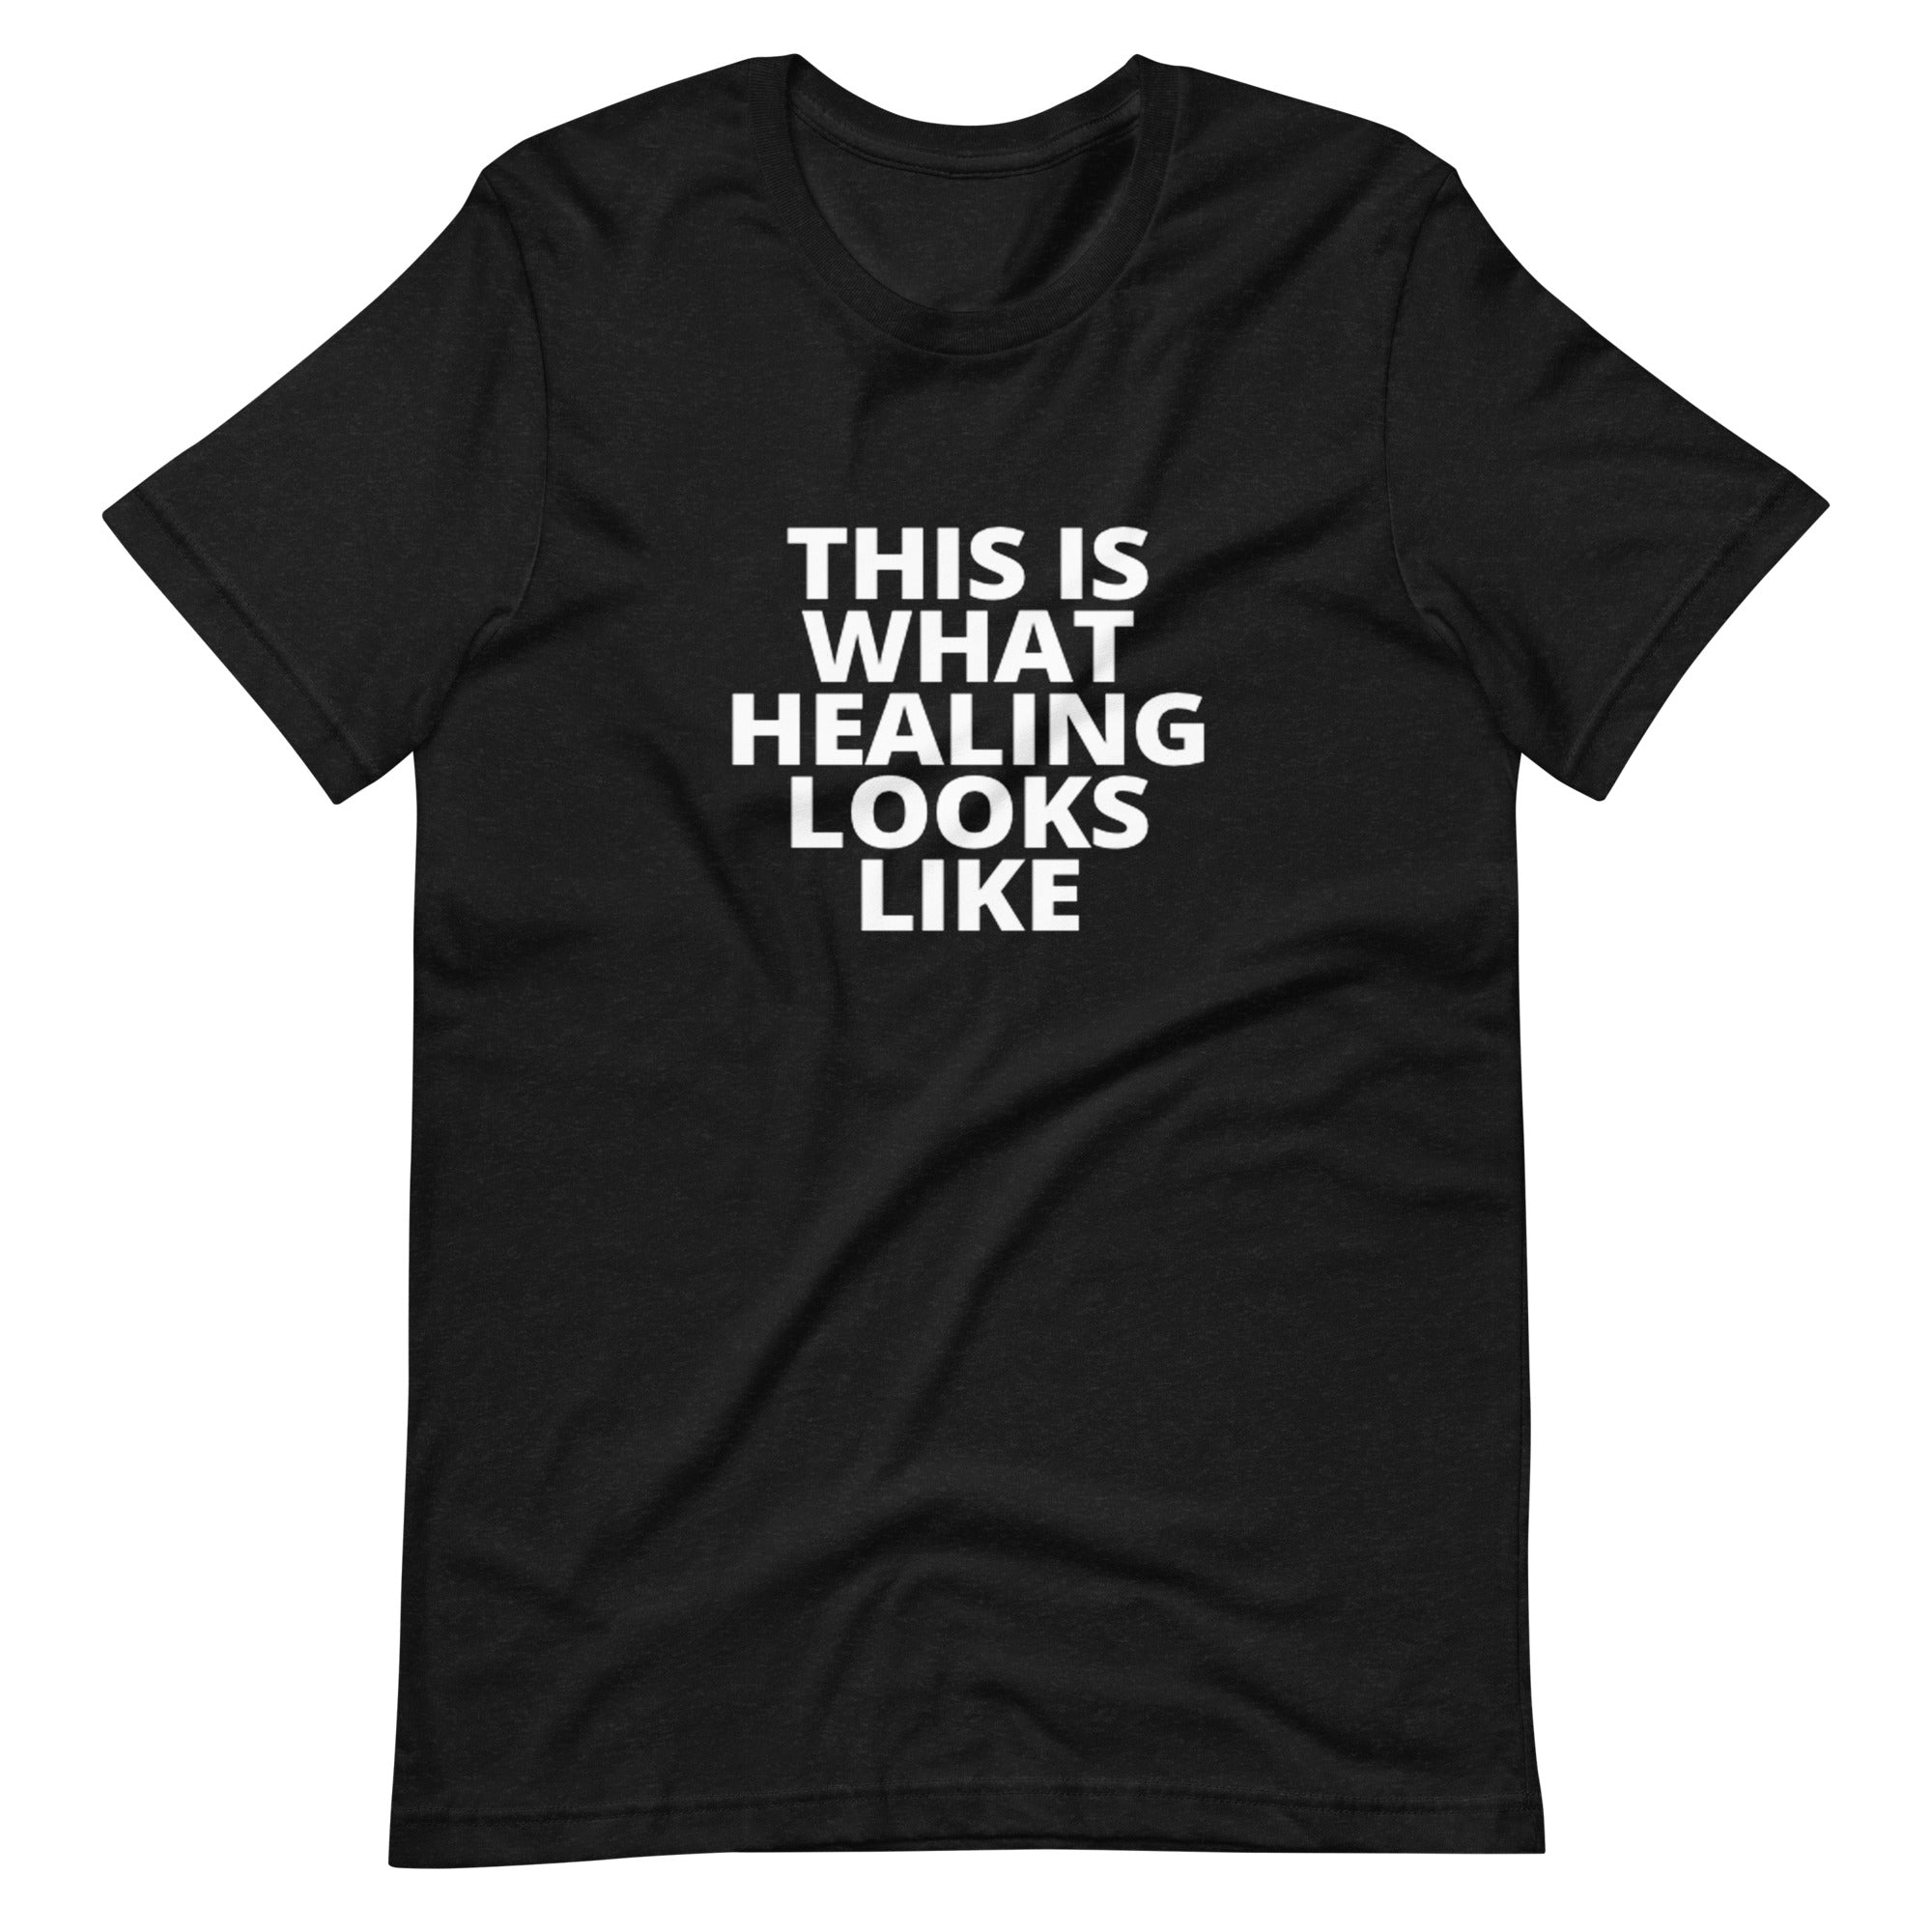 Adult Unisex "HEALING LOOKS LIKE" T-shirt